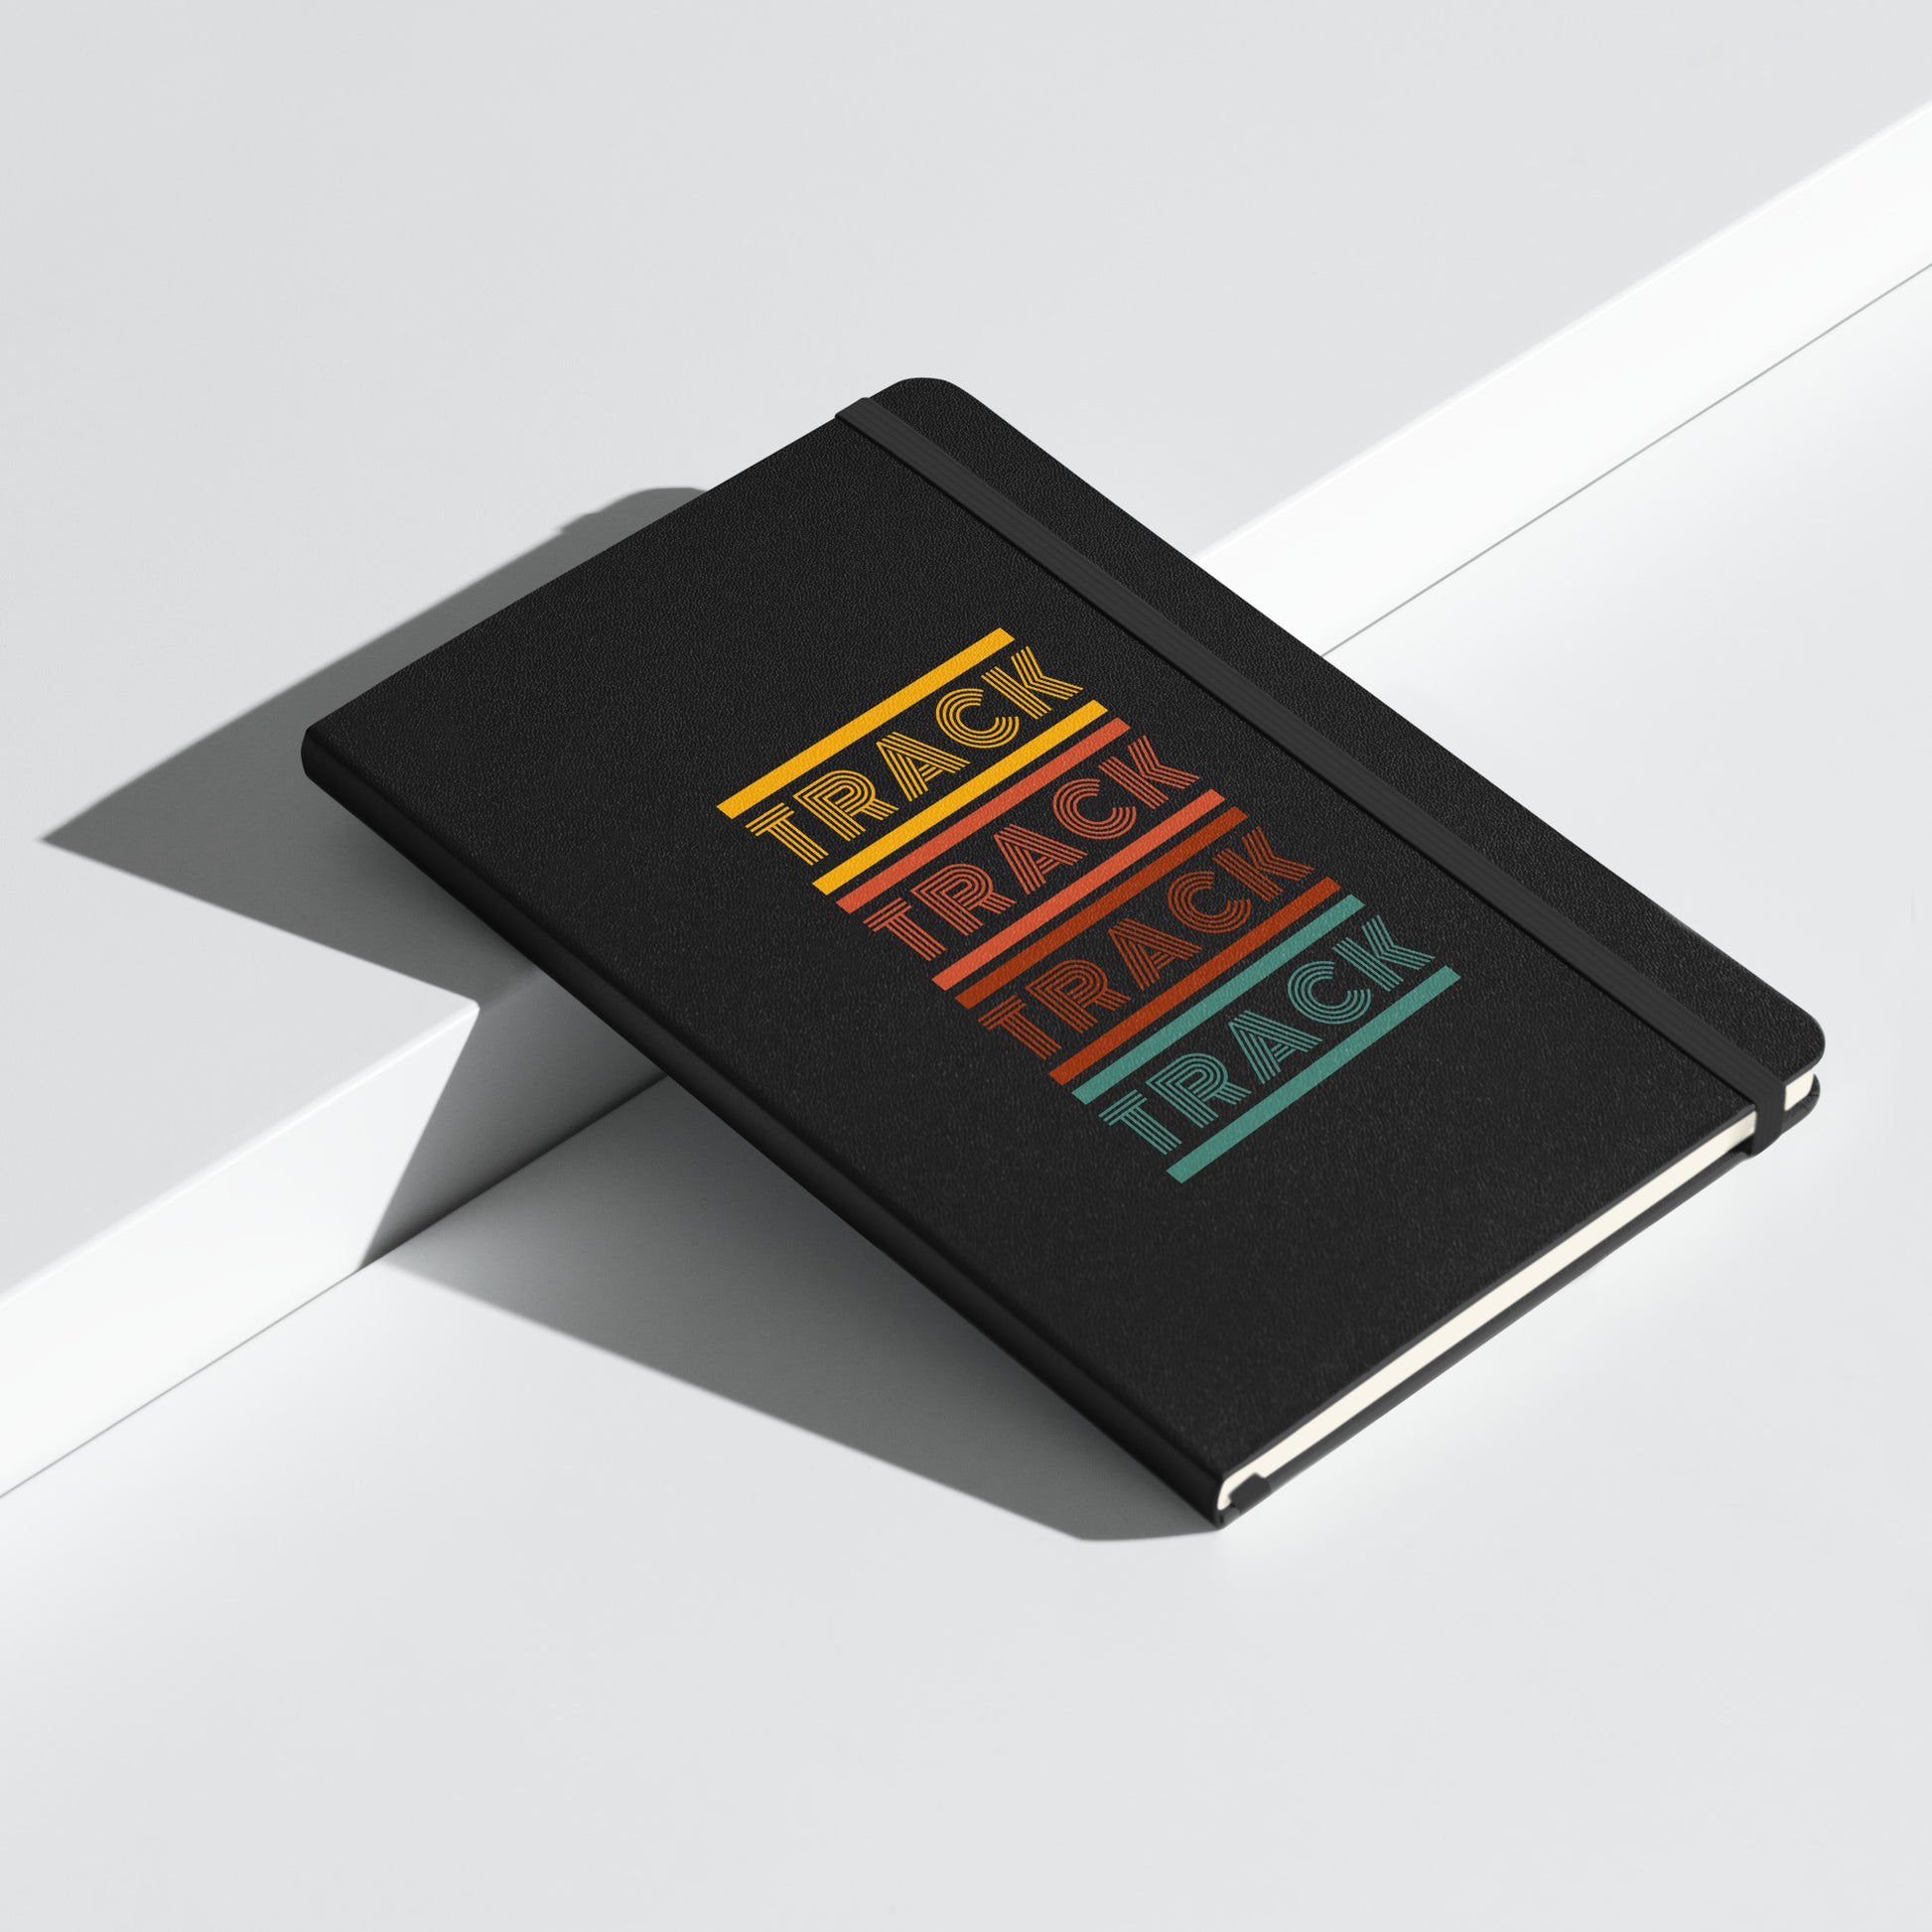 Hardcover bound notebook Track Retro Series - CineQuips